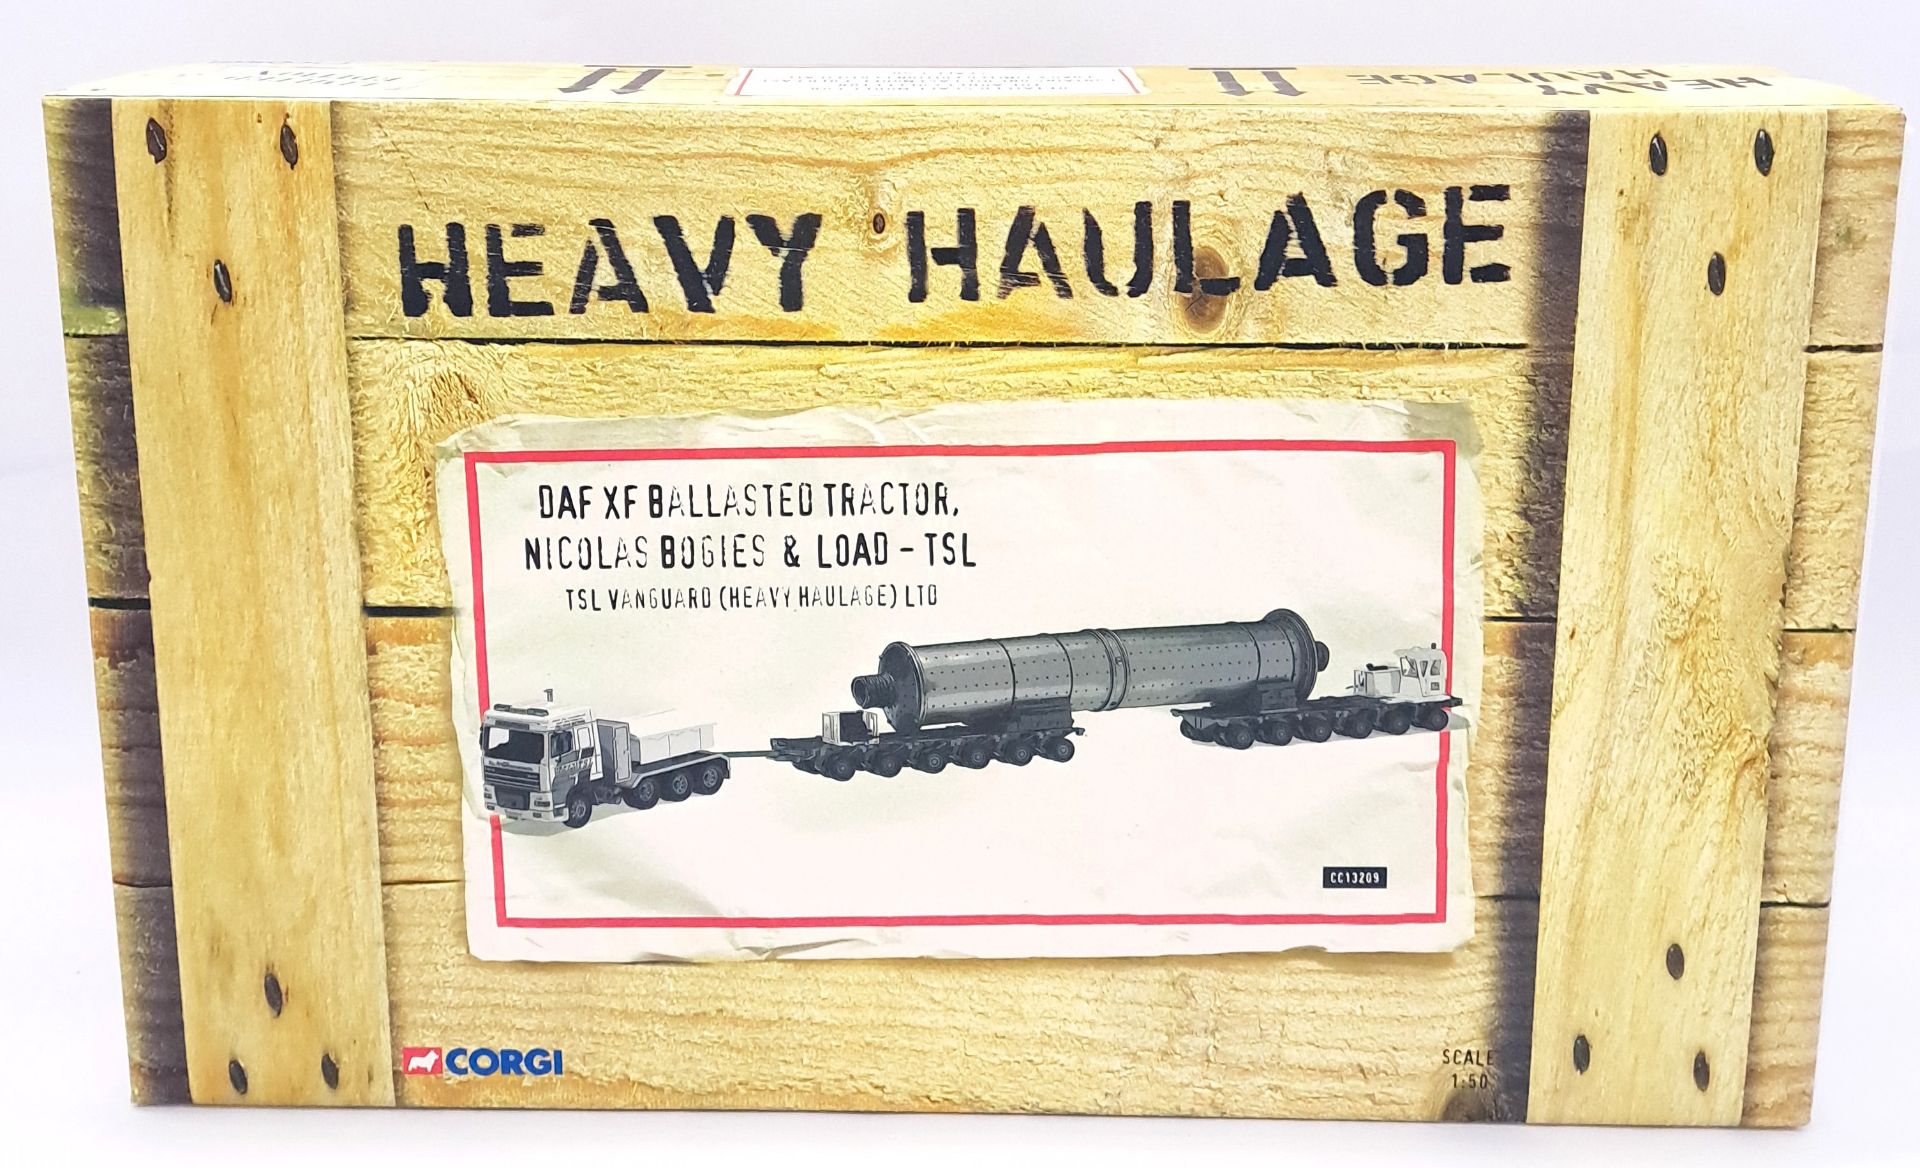 Corgi "Heavy Haulage" a boxed CC13209++++